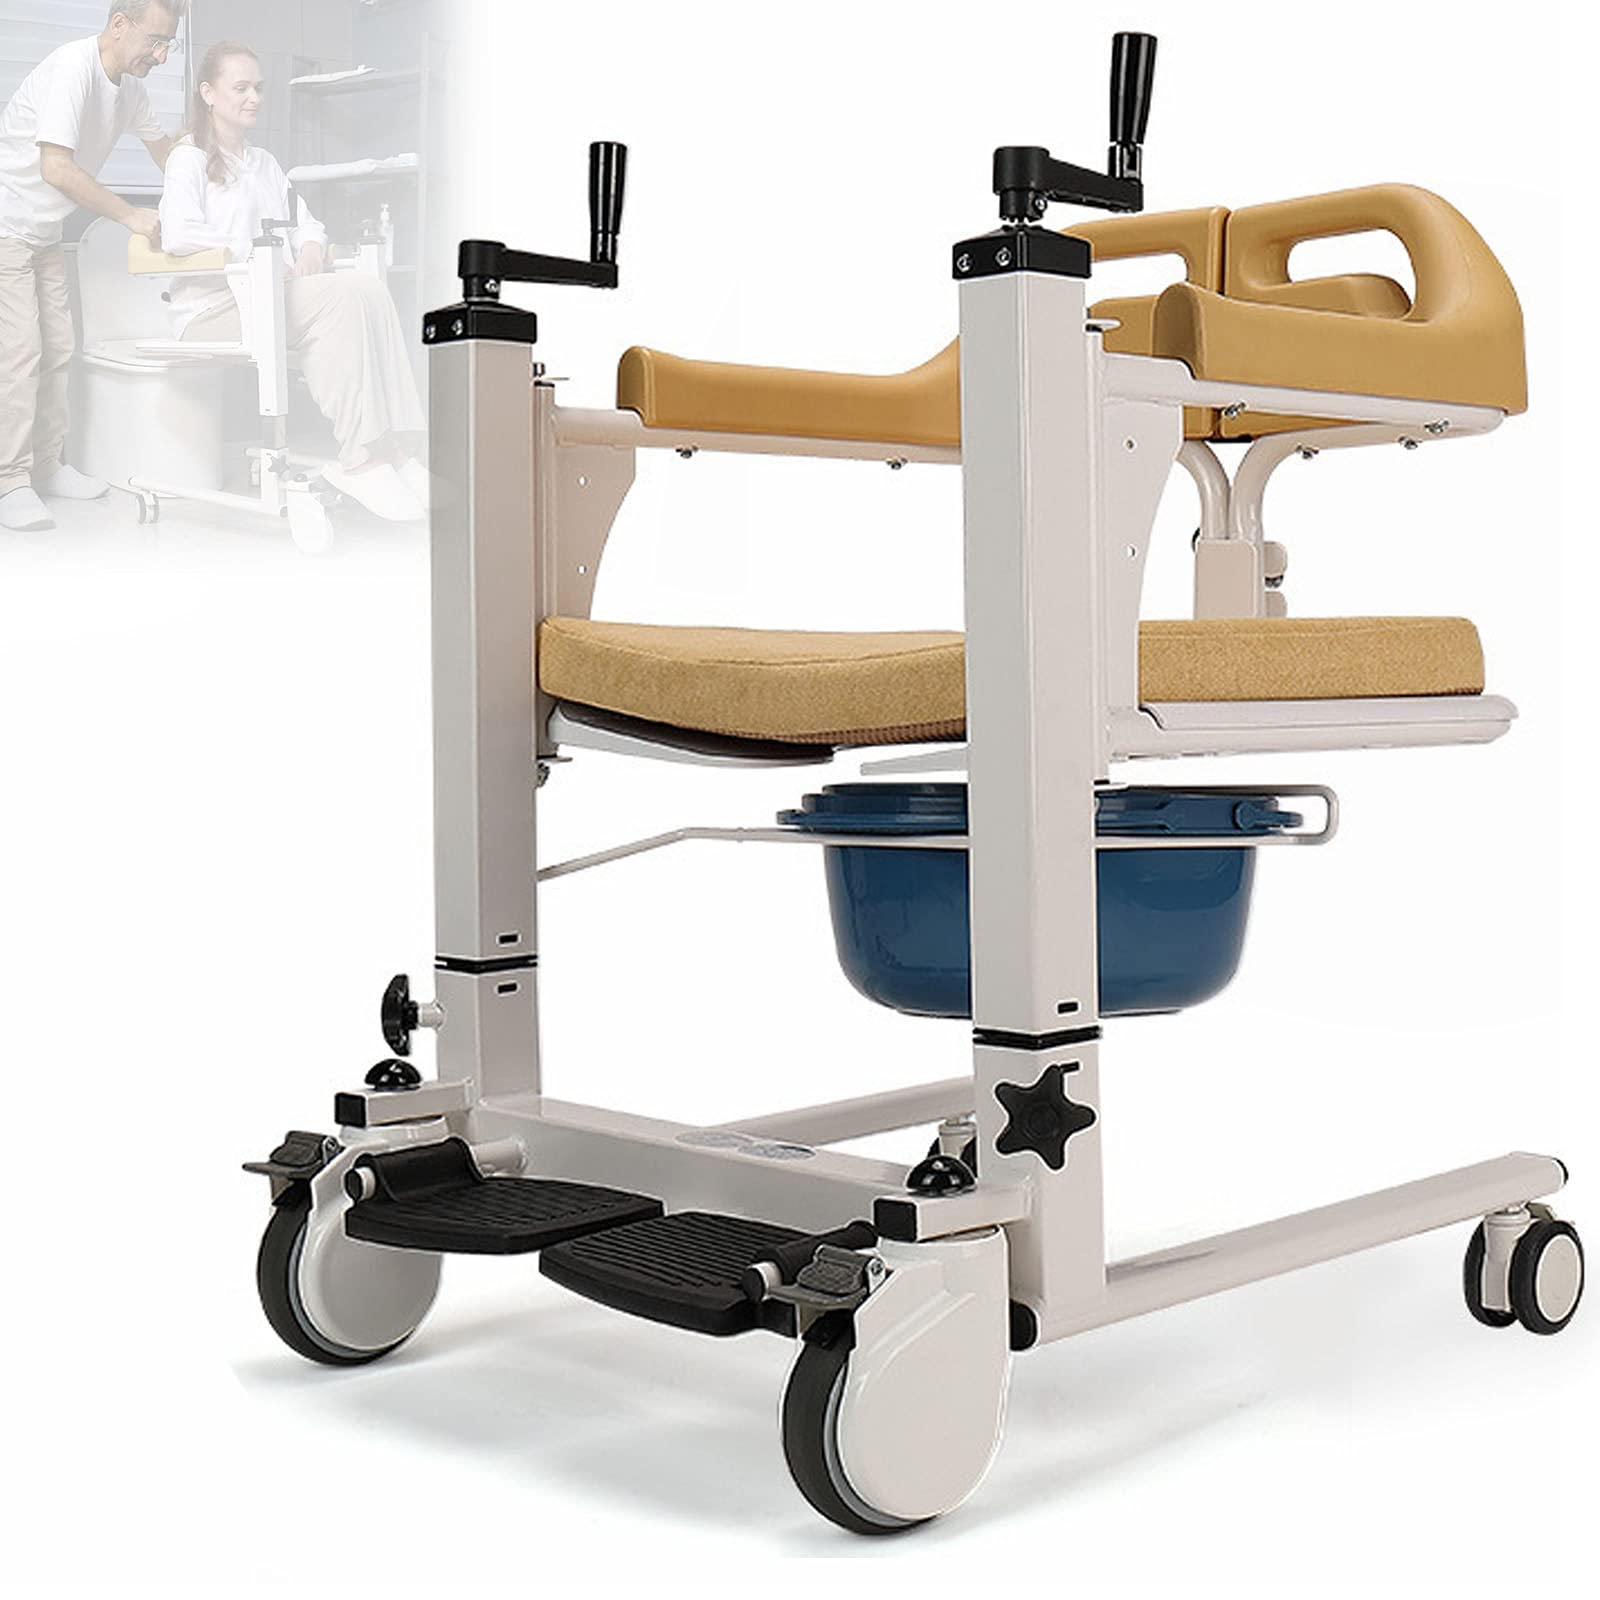 HPDOM Patientenlifter-Transferstuhl,Adjustable Lifting Bath Mobile Commode Rollstuhl Wheelchair with Toilet Seat, Patienten Transfer Lift Dusche Stuhl mit Toilette für Behinderte